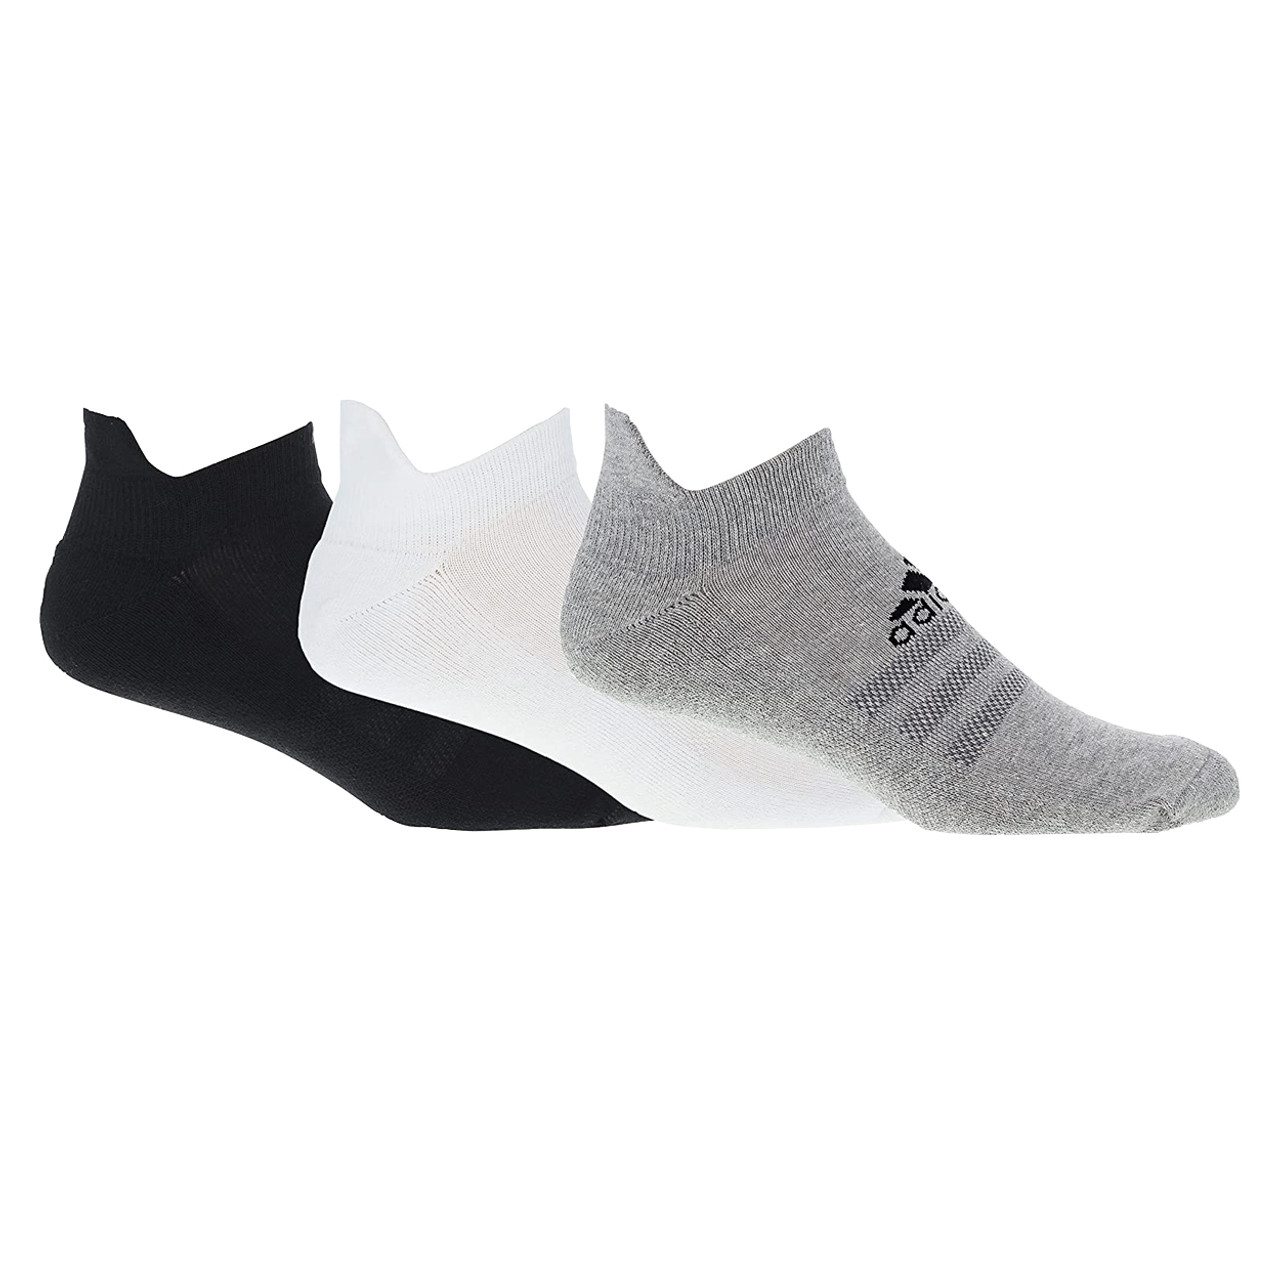 Adidas Golf 3-Pack Performance Men's Ankle Socks - GolfEtail.com